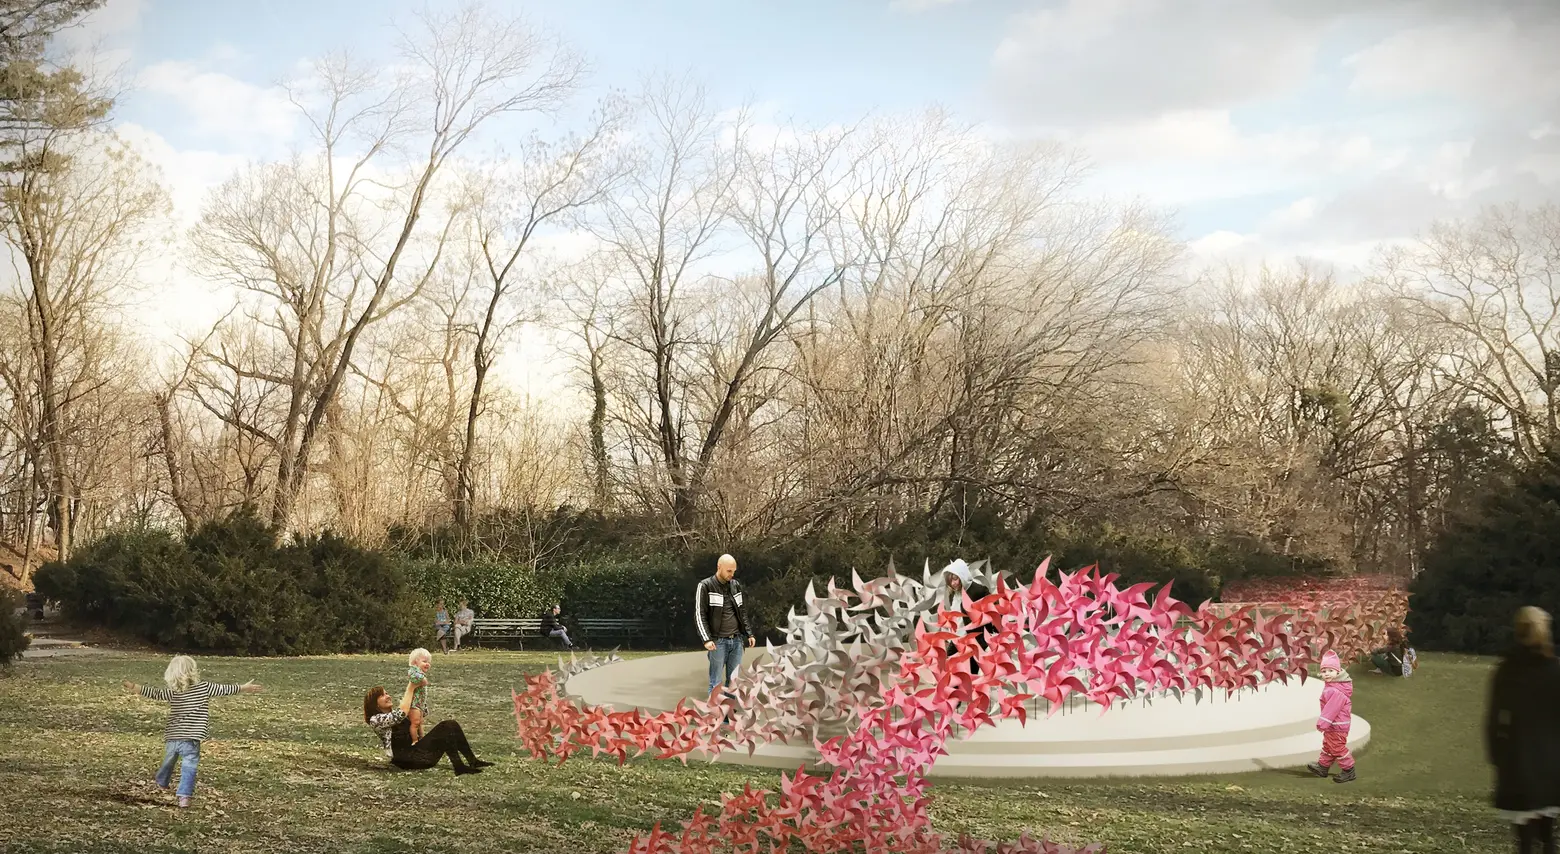 Suchi Reddy, prospect park, pinwheel project